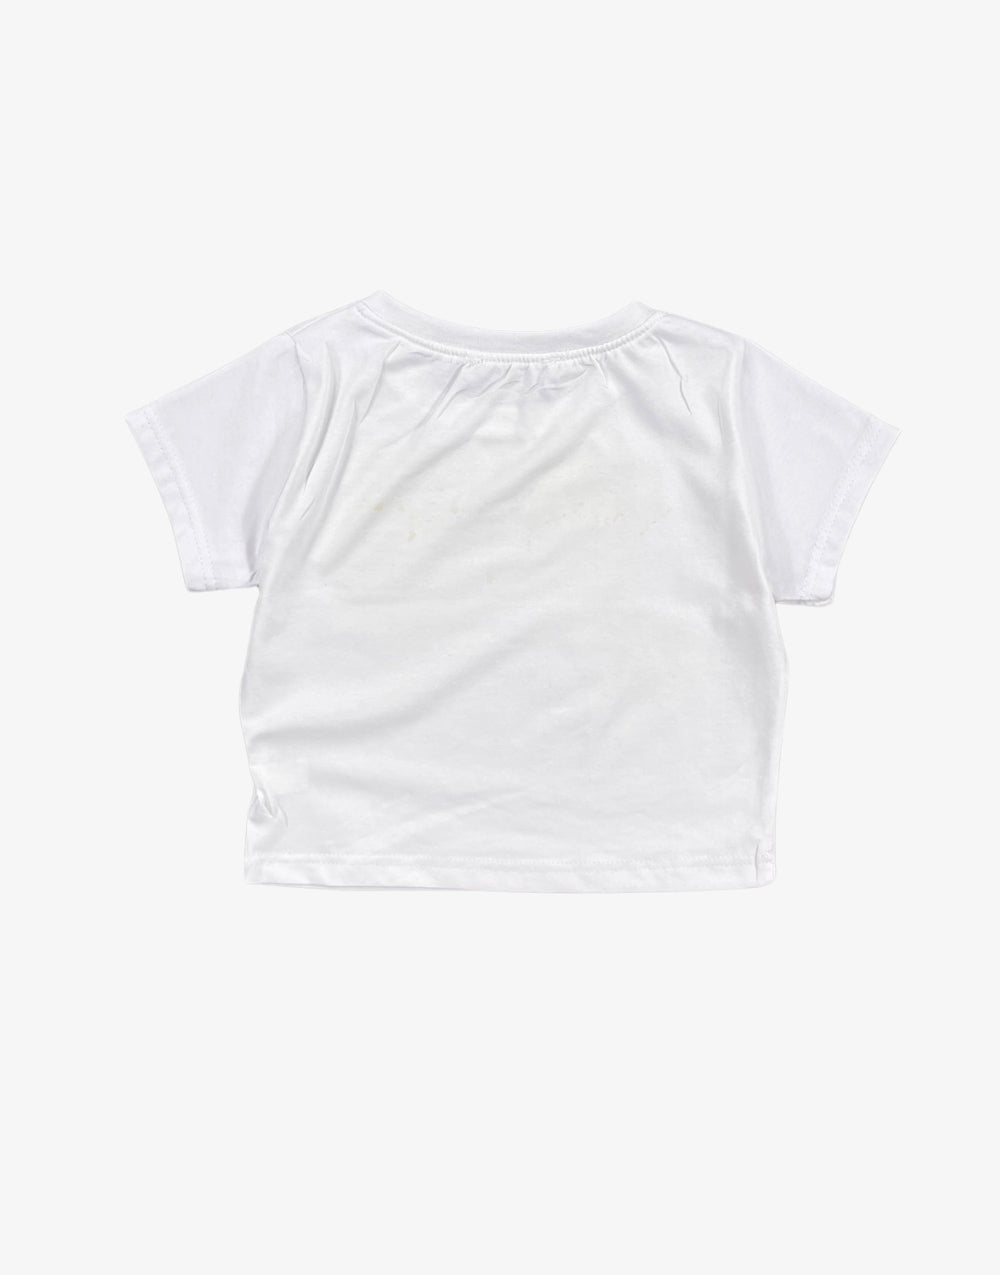 Women's Crop White T-Shirt - STREETMODE™